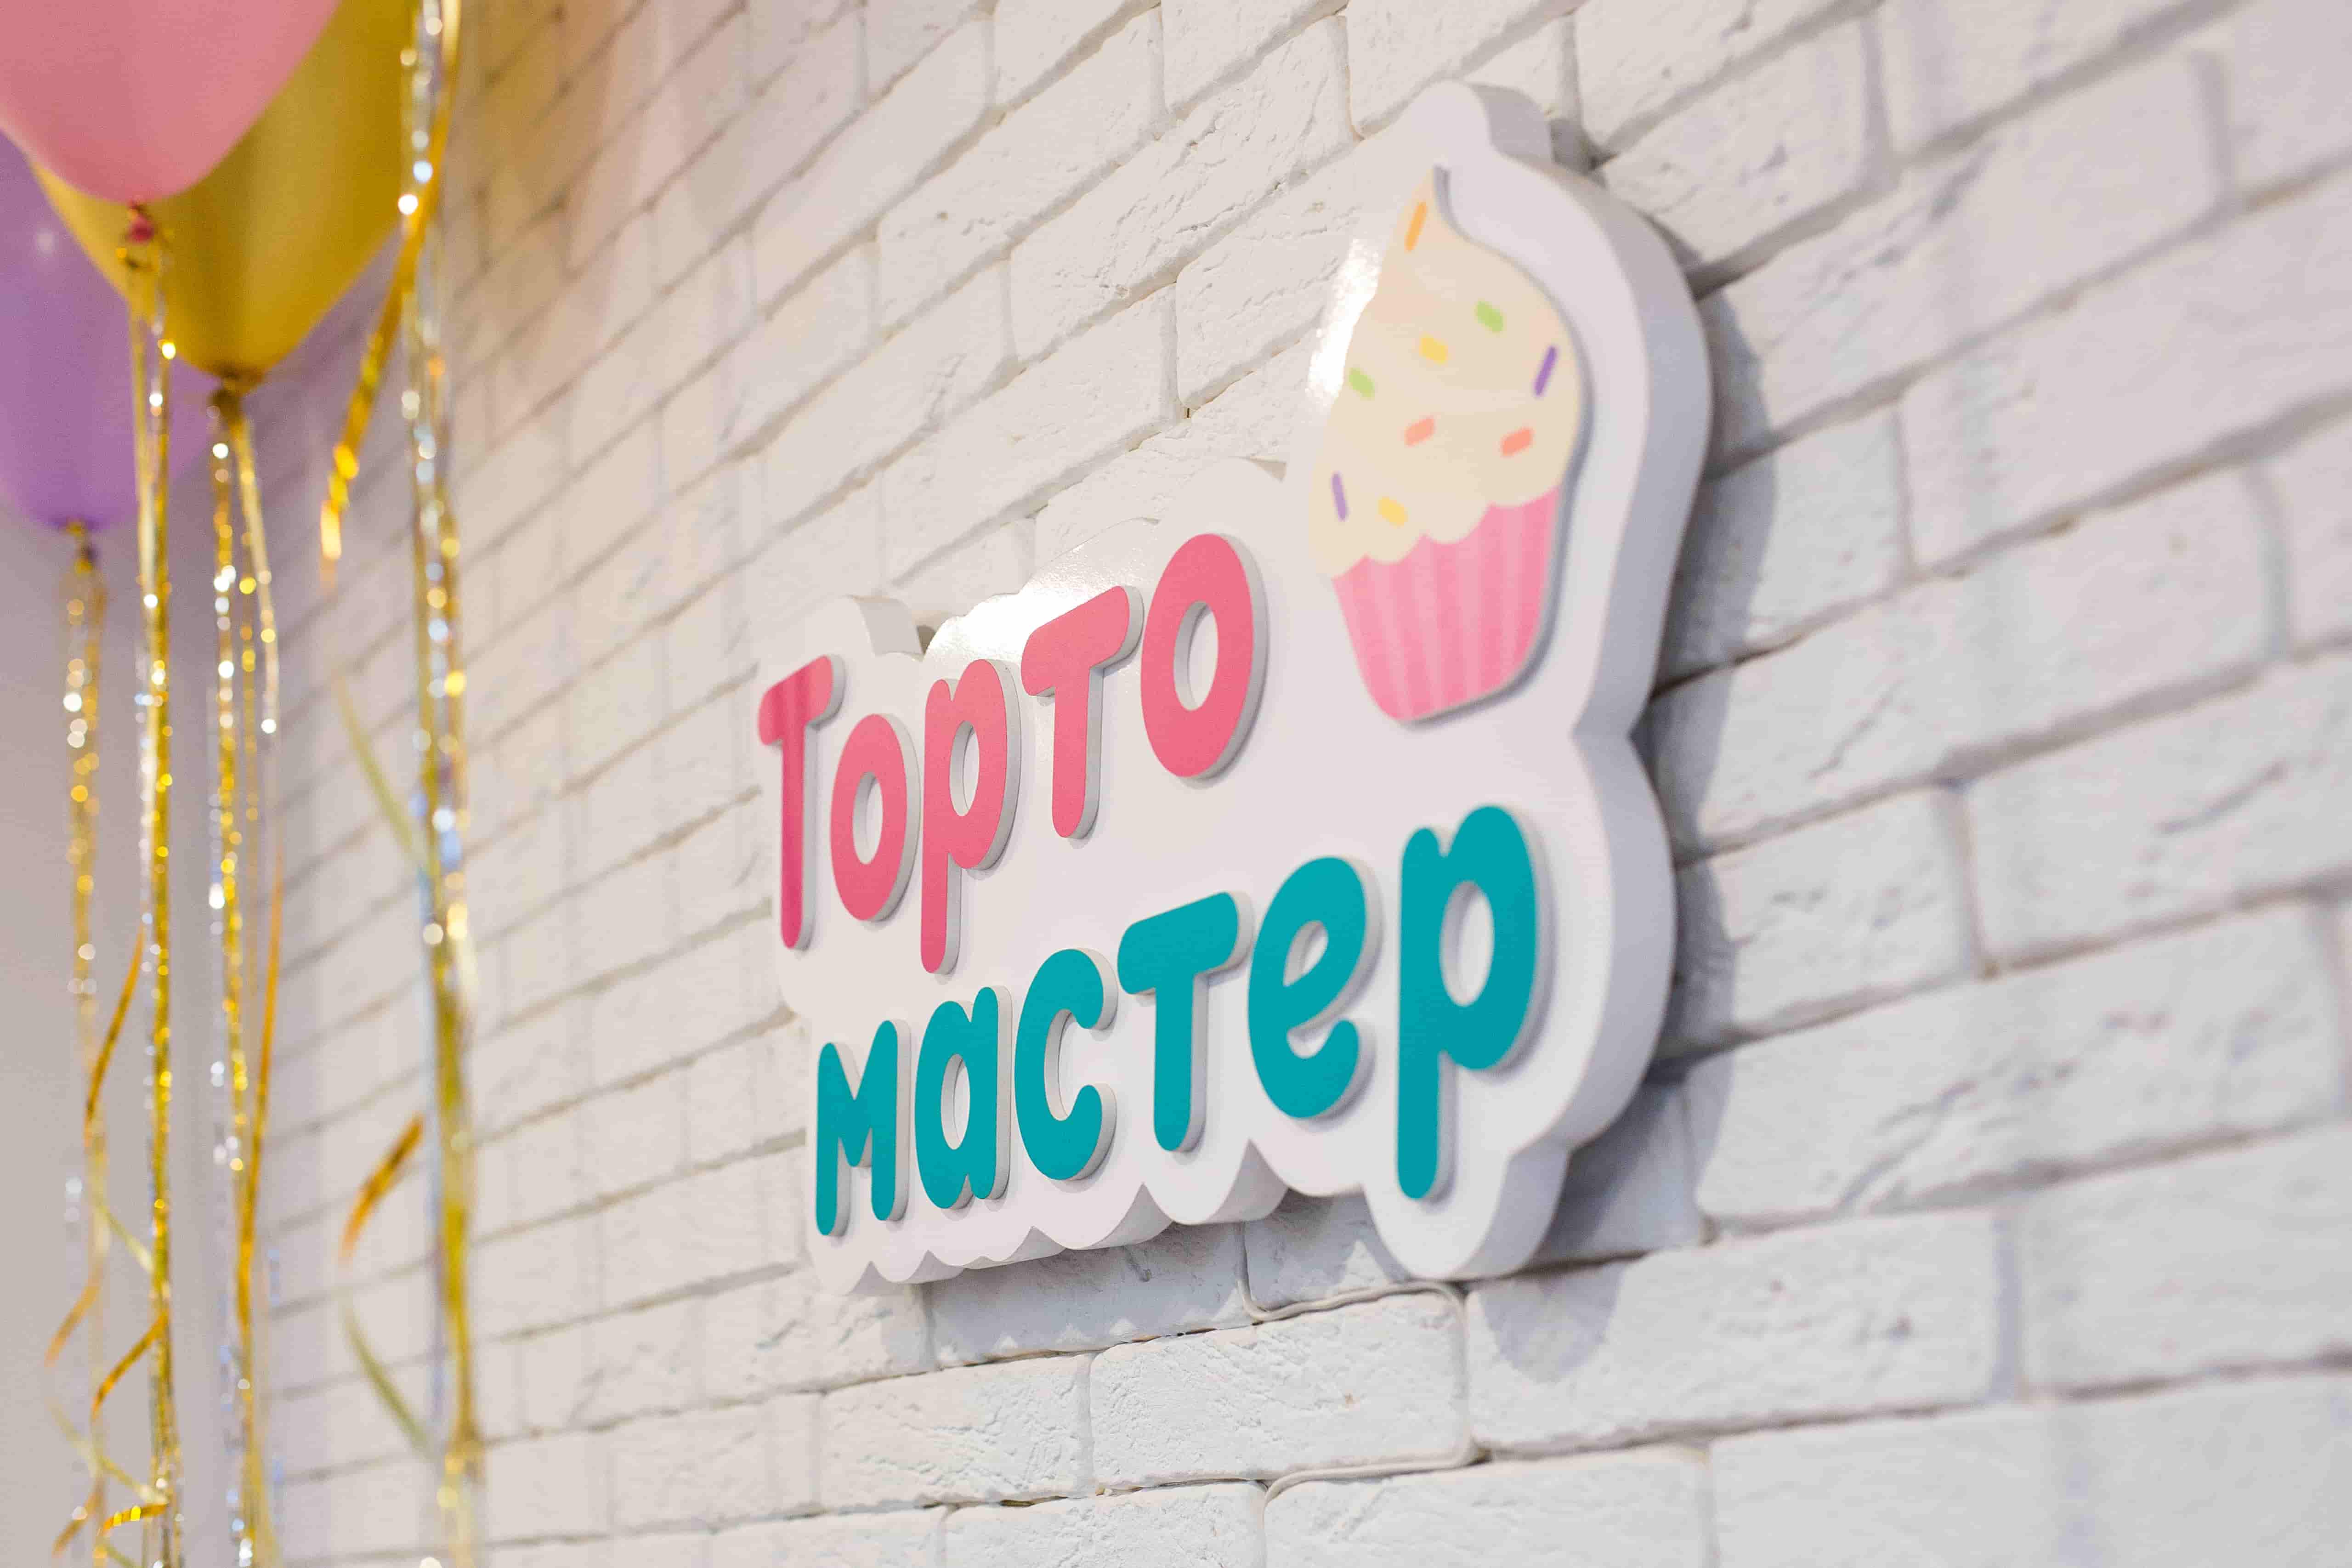 Тортомастер Интернет Магазин Иваново